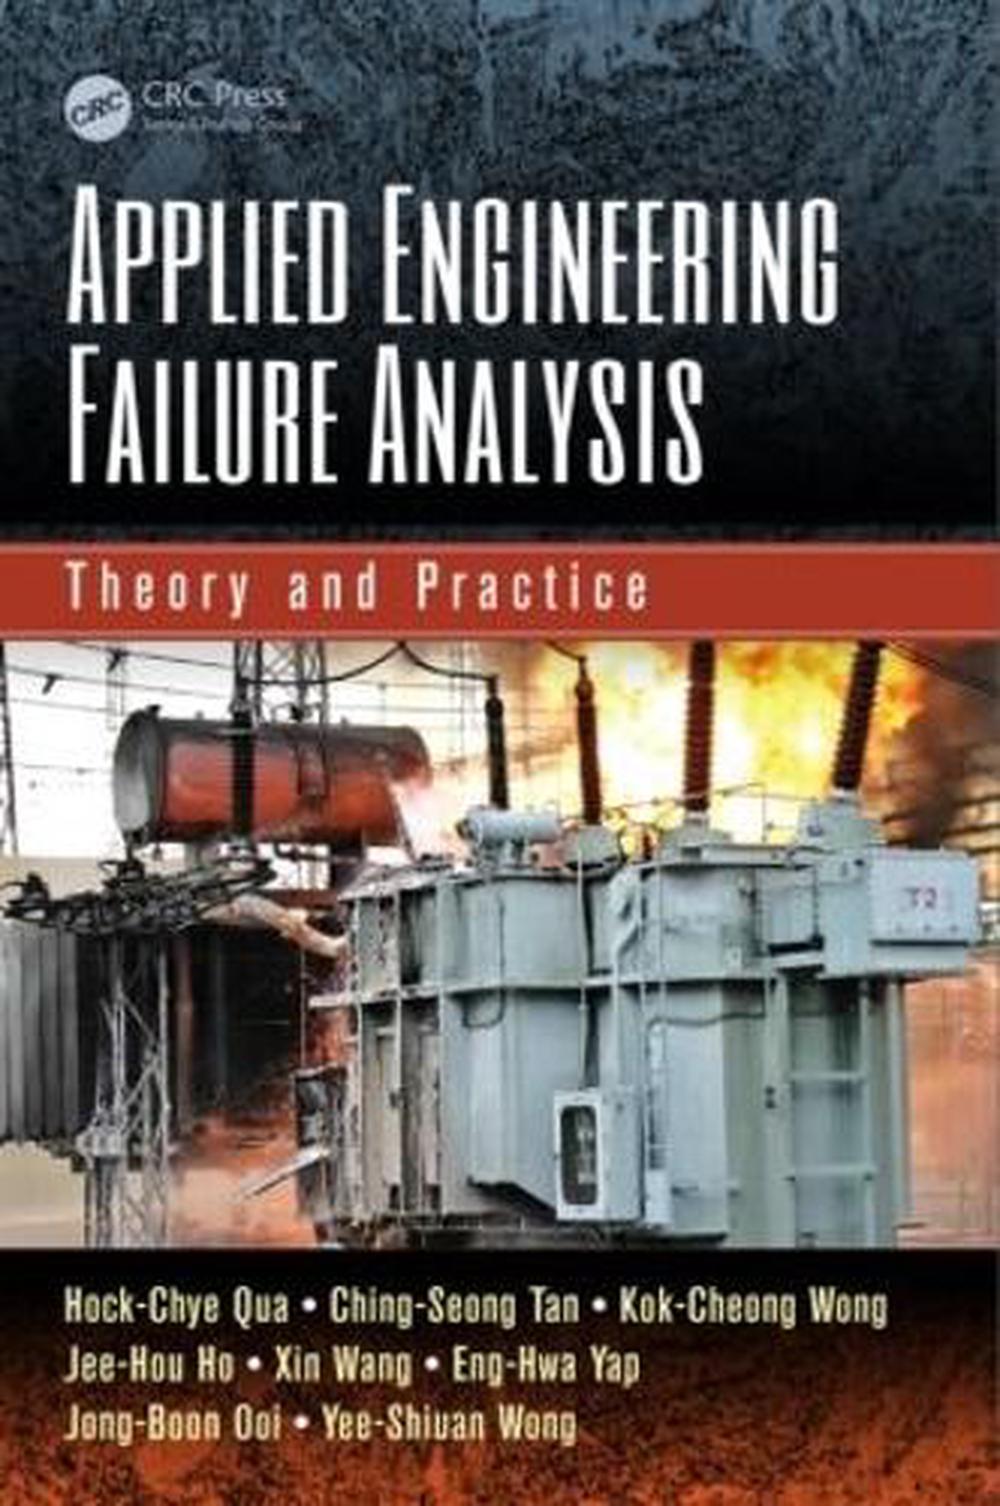 case study in engineering failure analysis